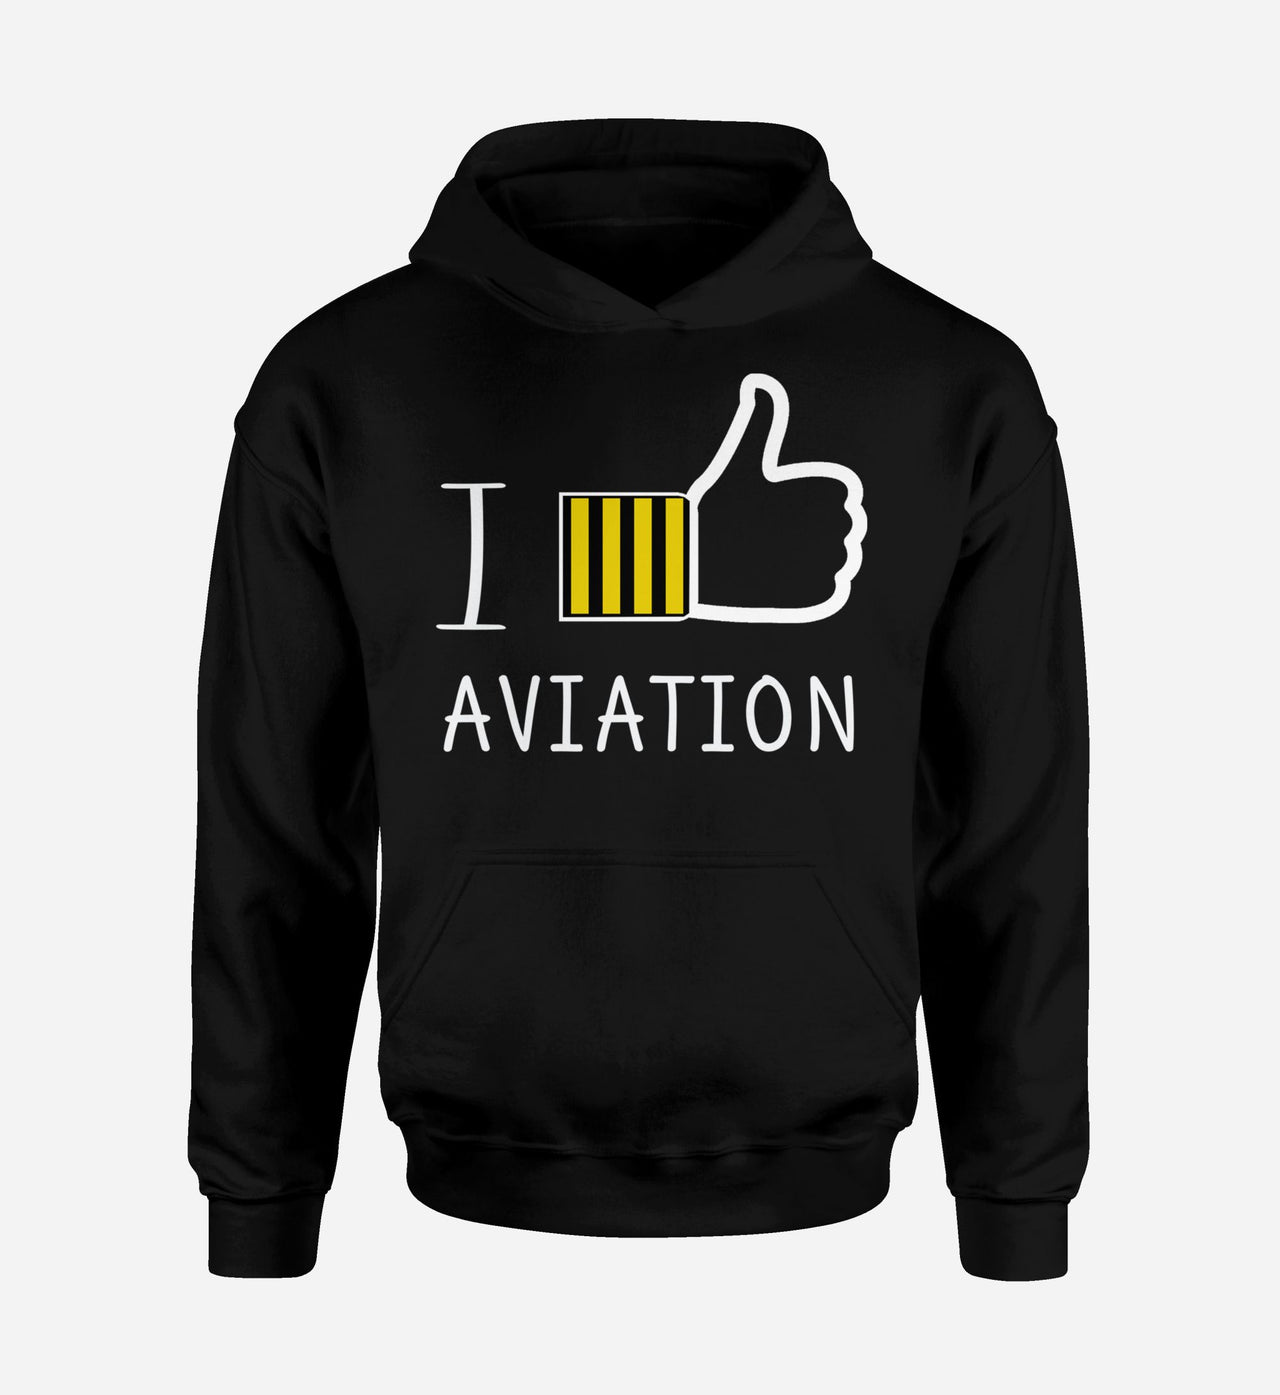 I Like Aviation Designed Hoodies